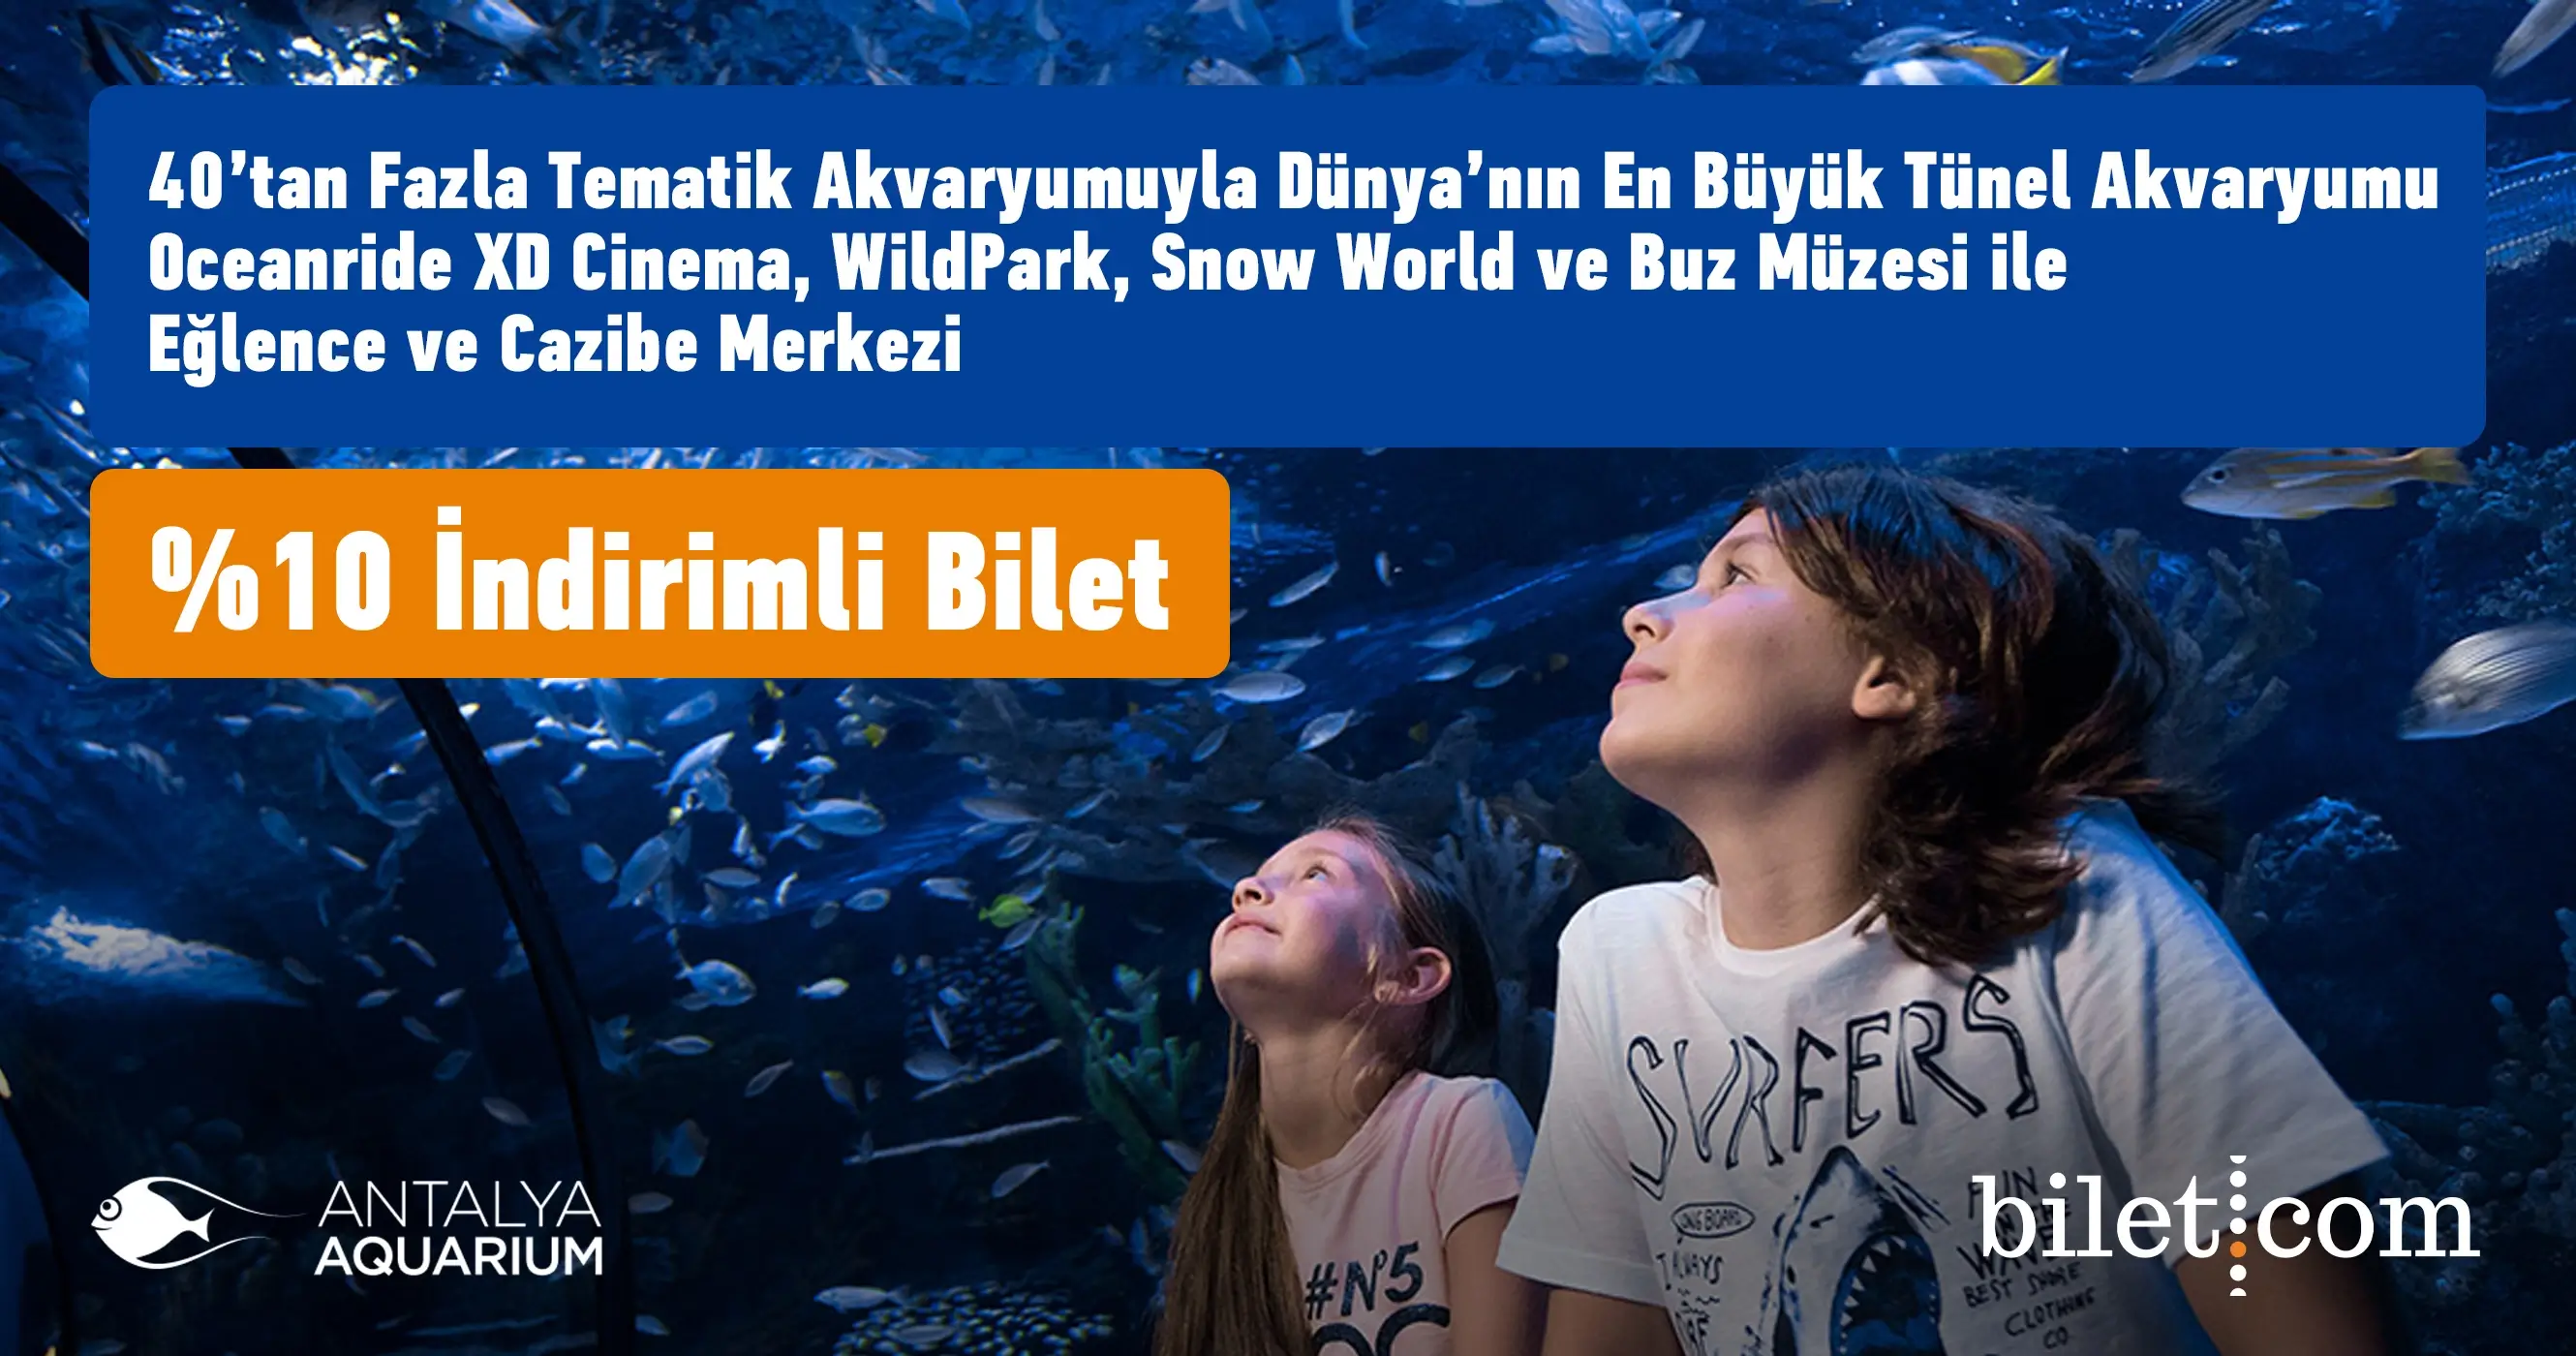 Анталийский аквариум Билет - 1